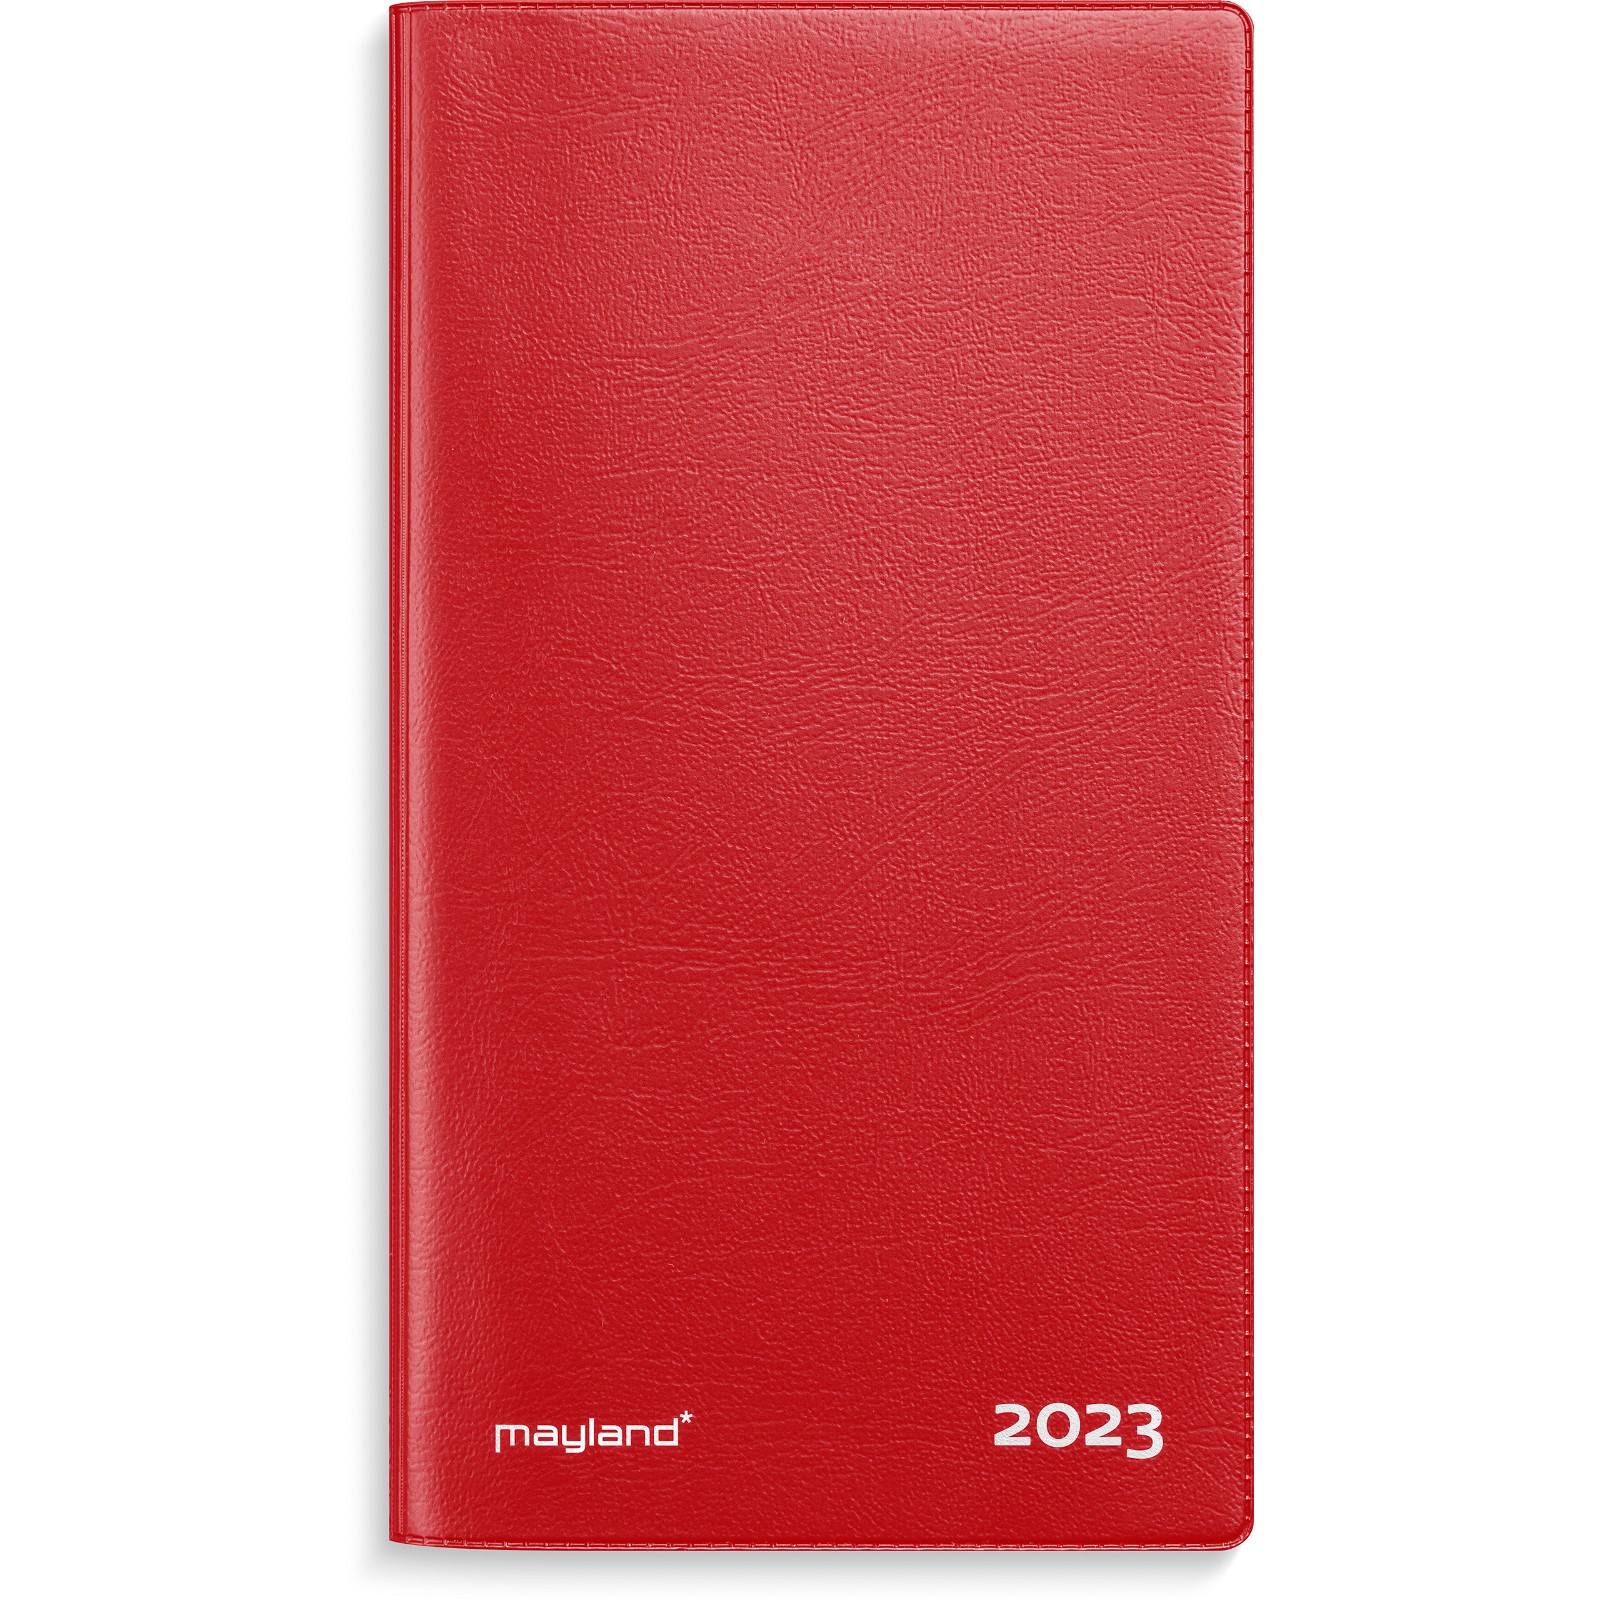 Mayland 2023 23090010 indexkalender 17x9,5x0,5cm rød